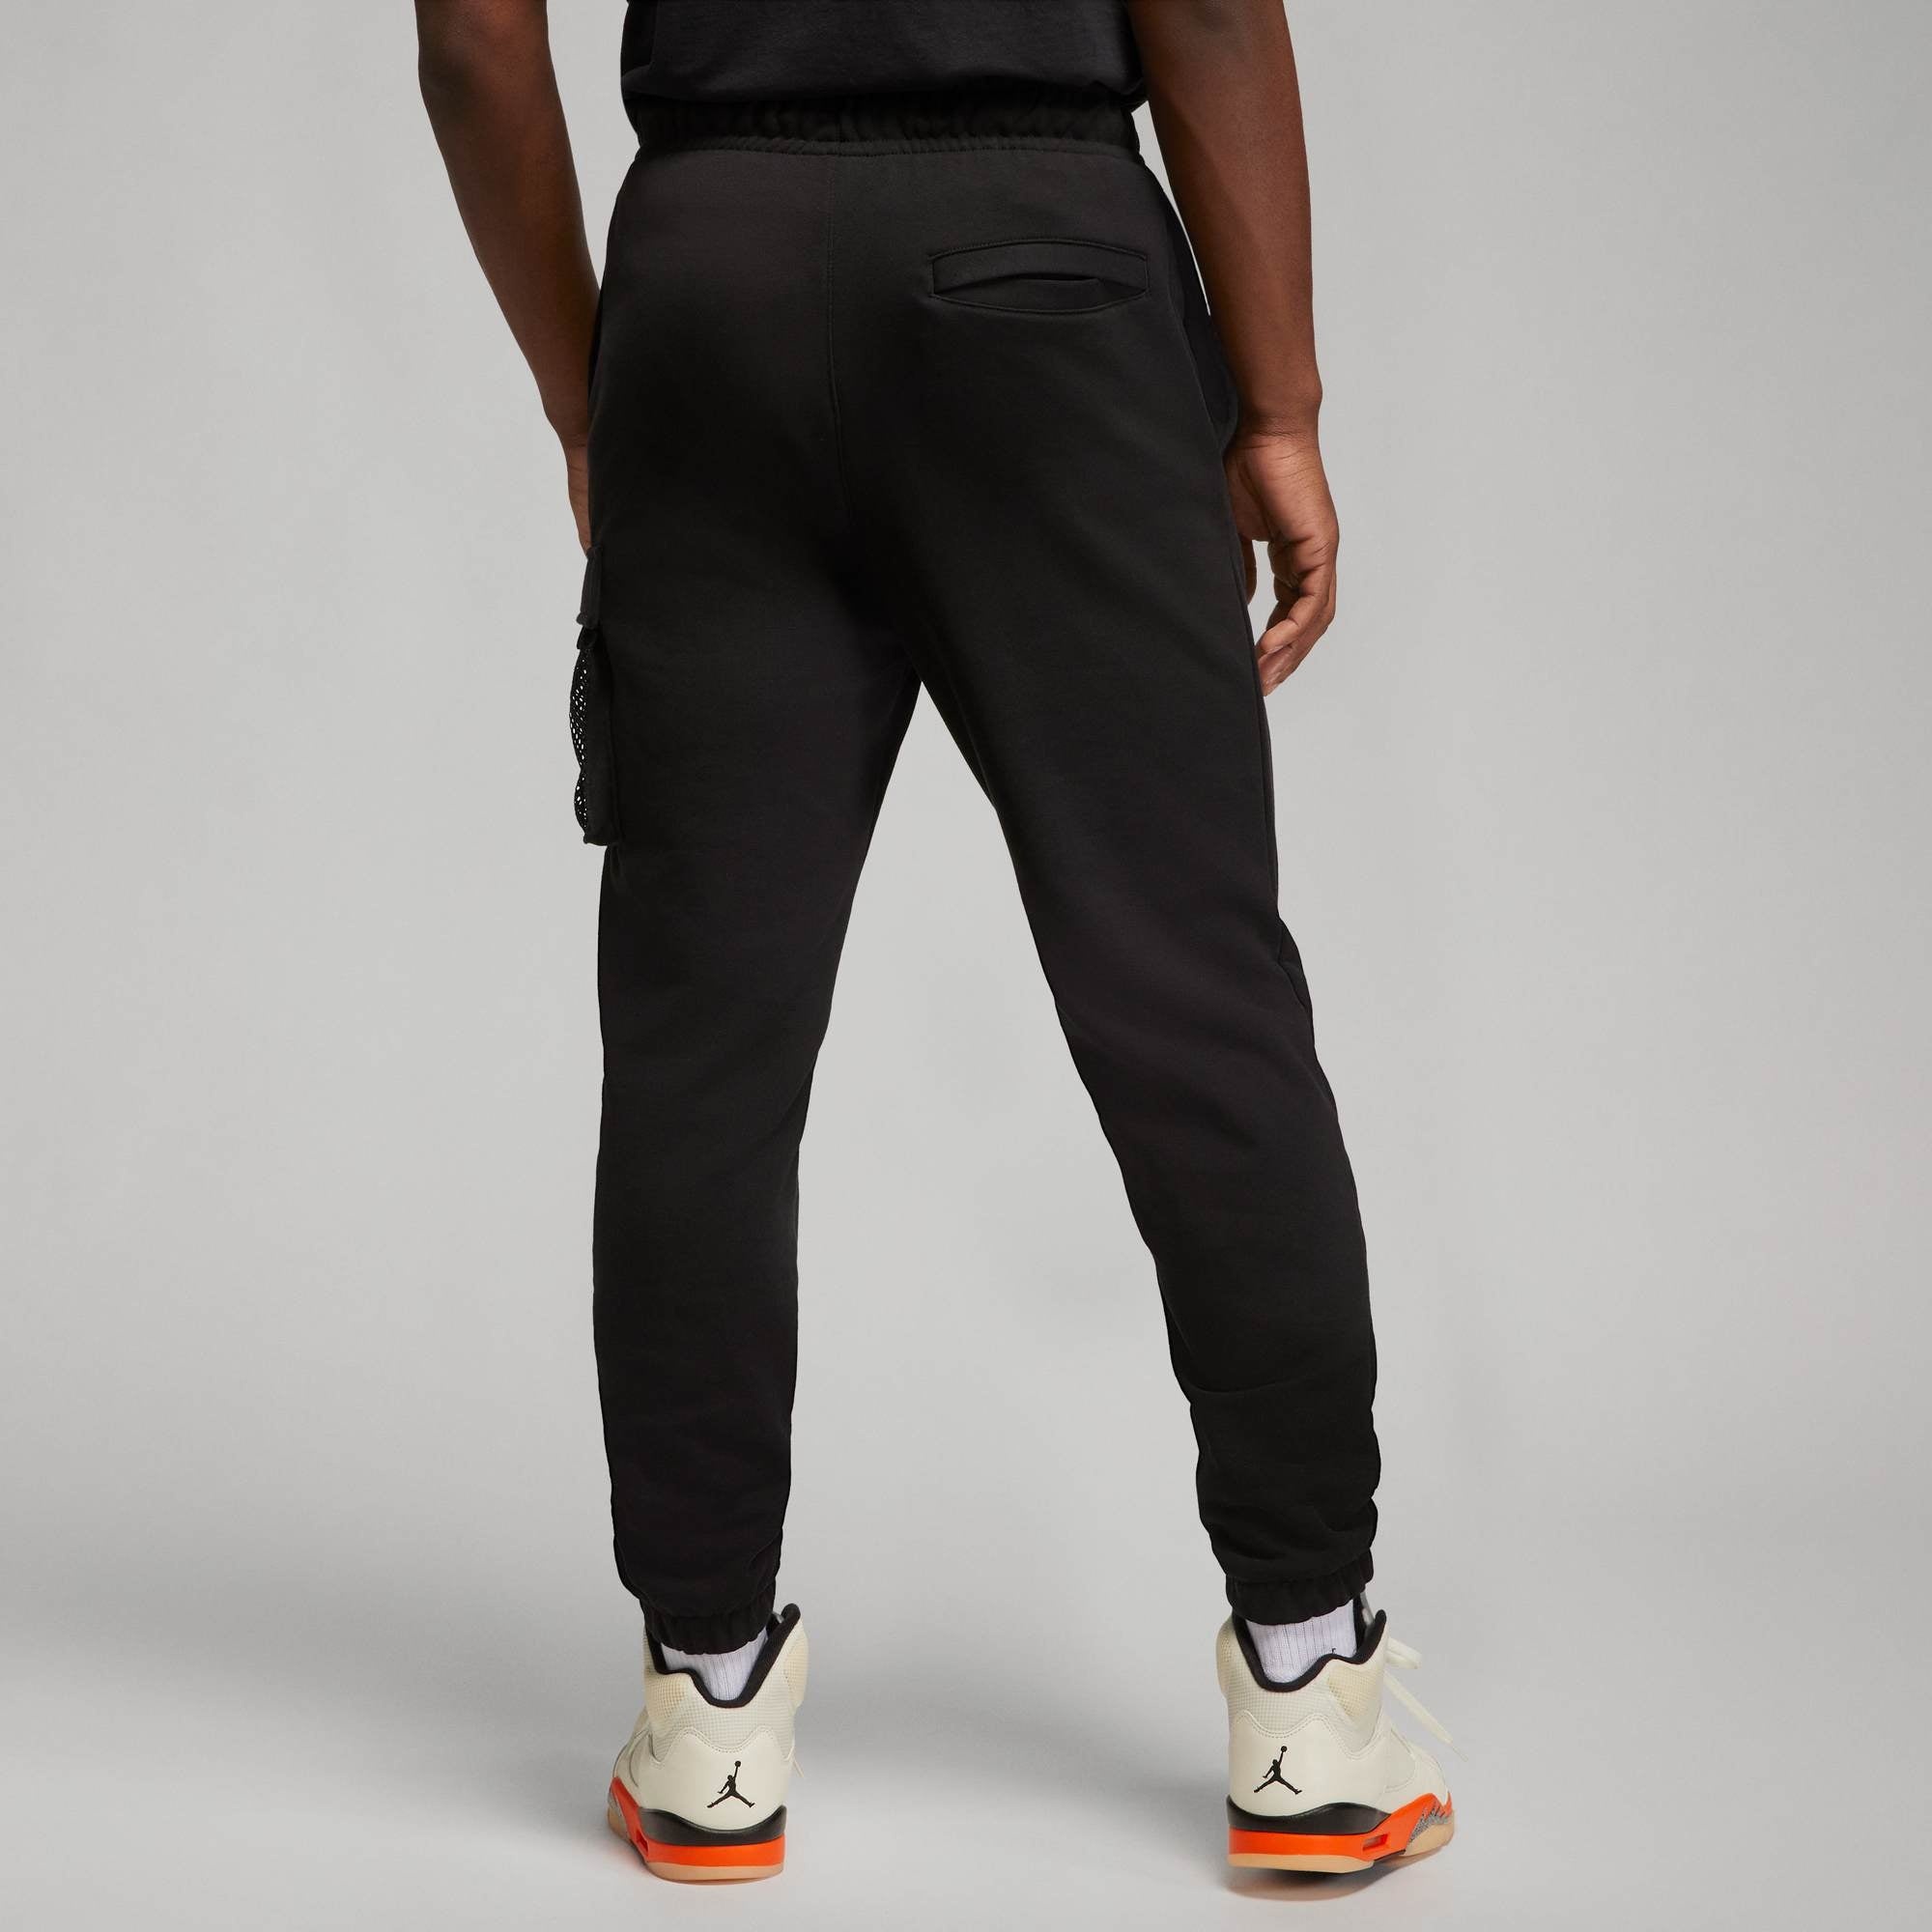 Air Jordan Jumpman Solid Color Mesh Big Pocket Breathable Lacing Sports Pants Black DM1401-010 - 5